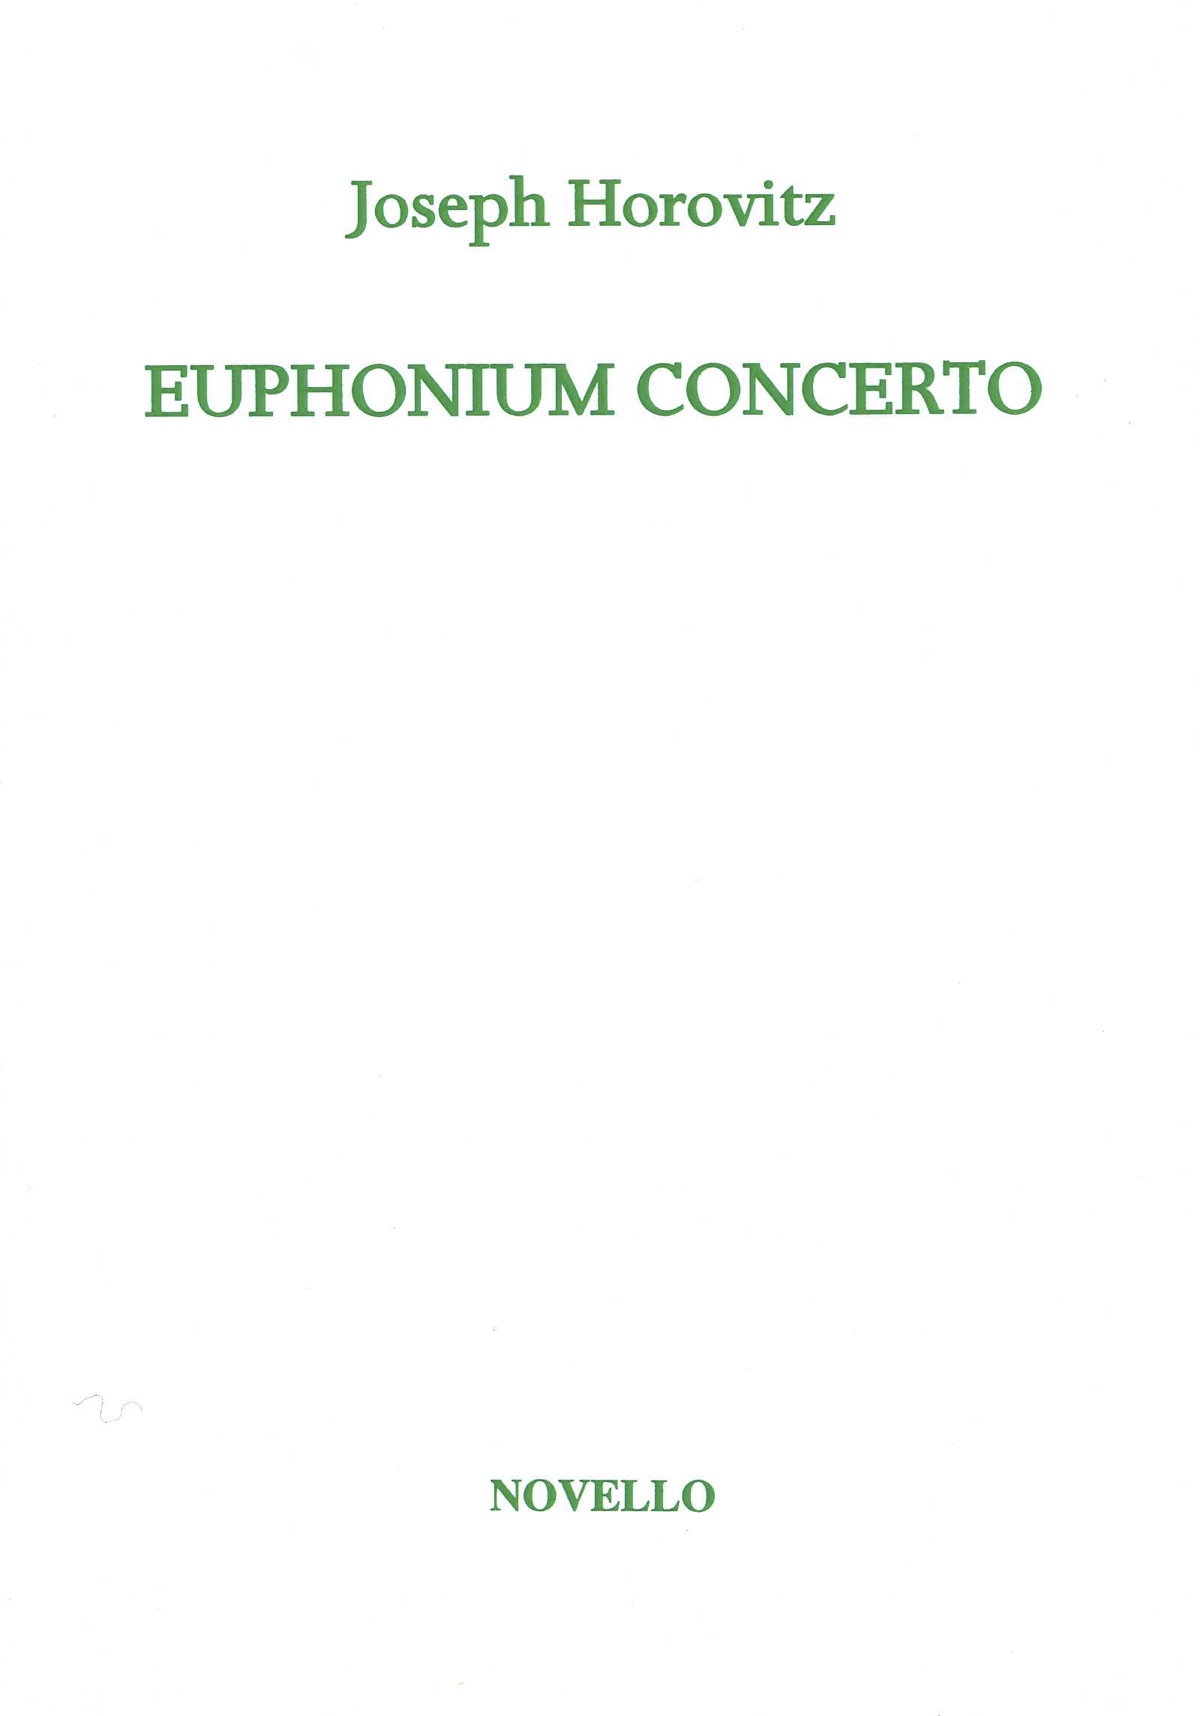 Euphonium Concerto - Joseph Horovitz - Euphonium and Piano